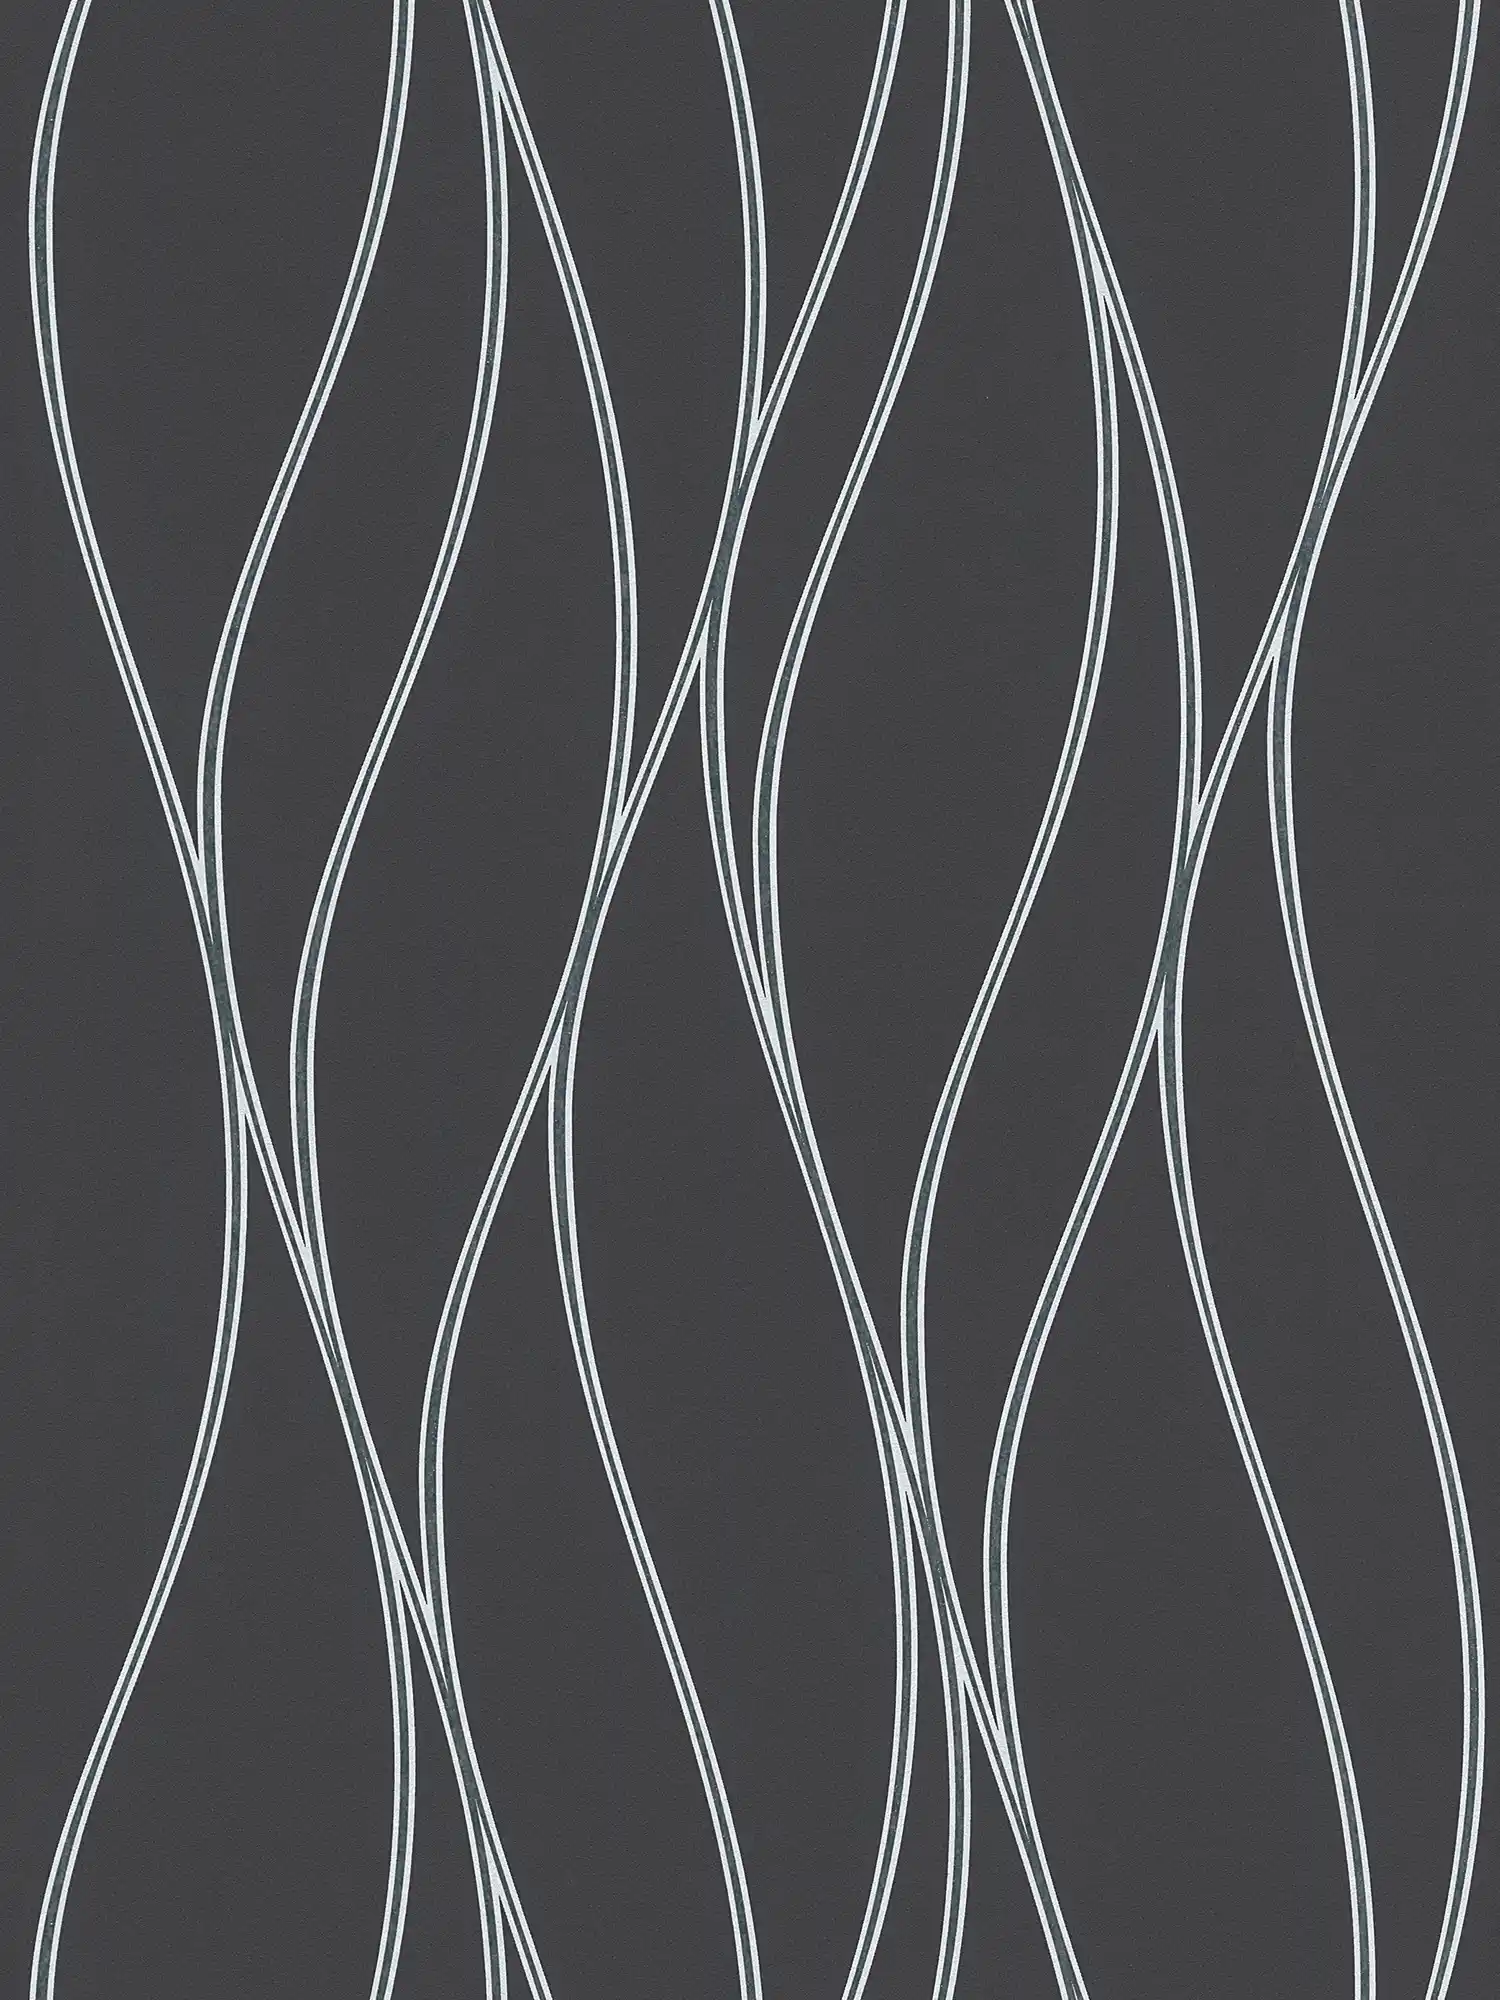 Wallpaper wavy lines vertical, metallic effect - black, silver, grey
